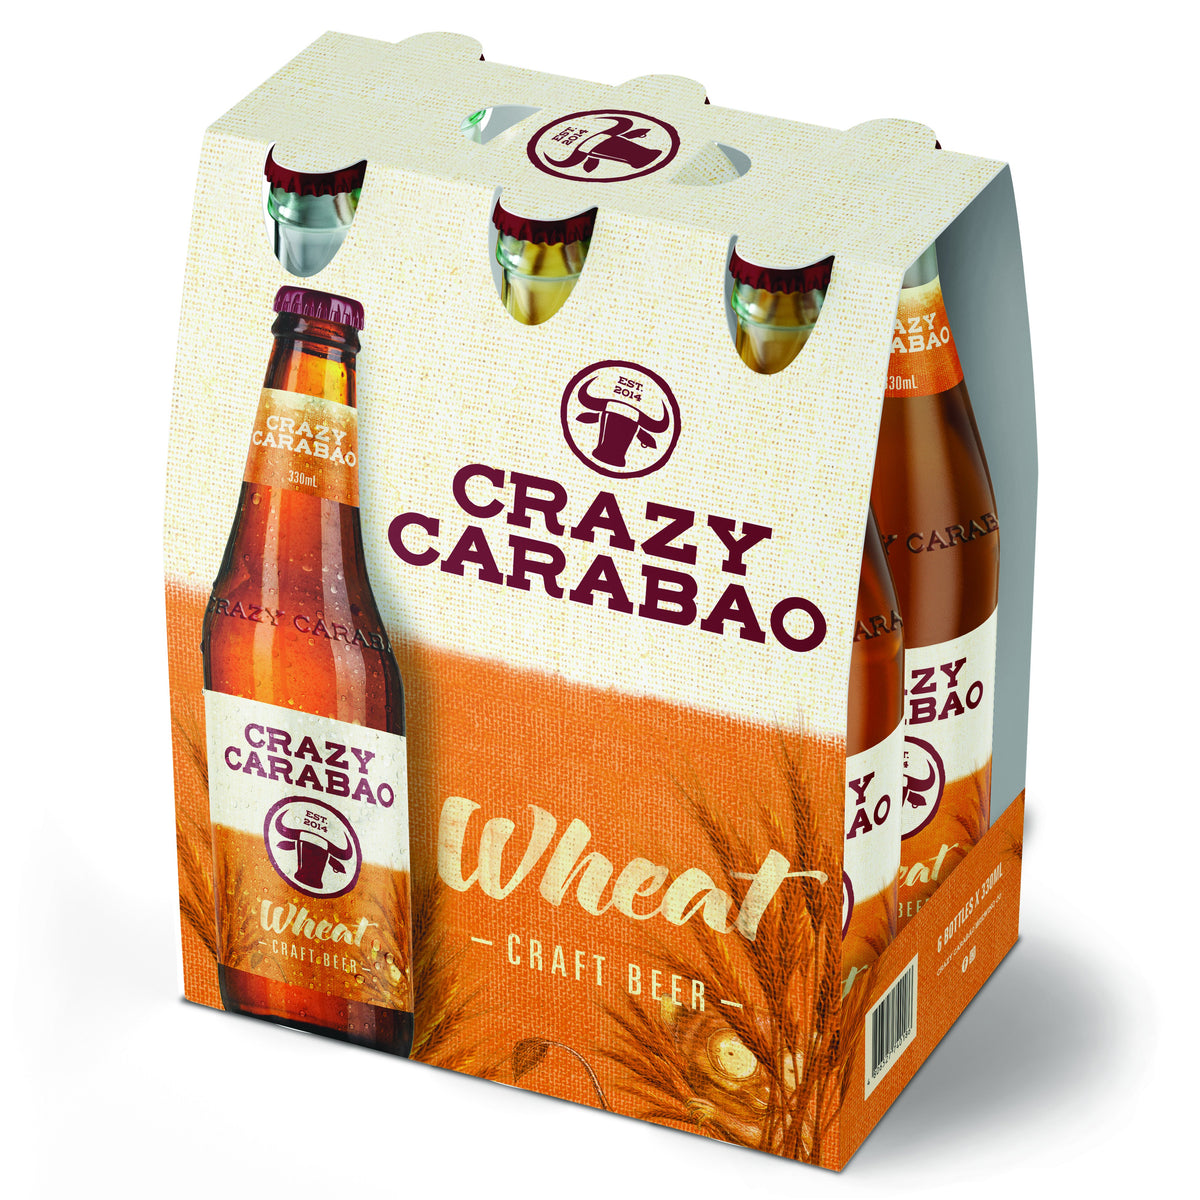 Crazy Carabao Wheat Craft Beer 330ml bottle 6-pack